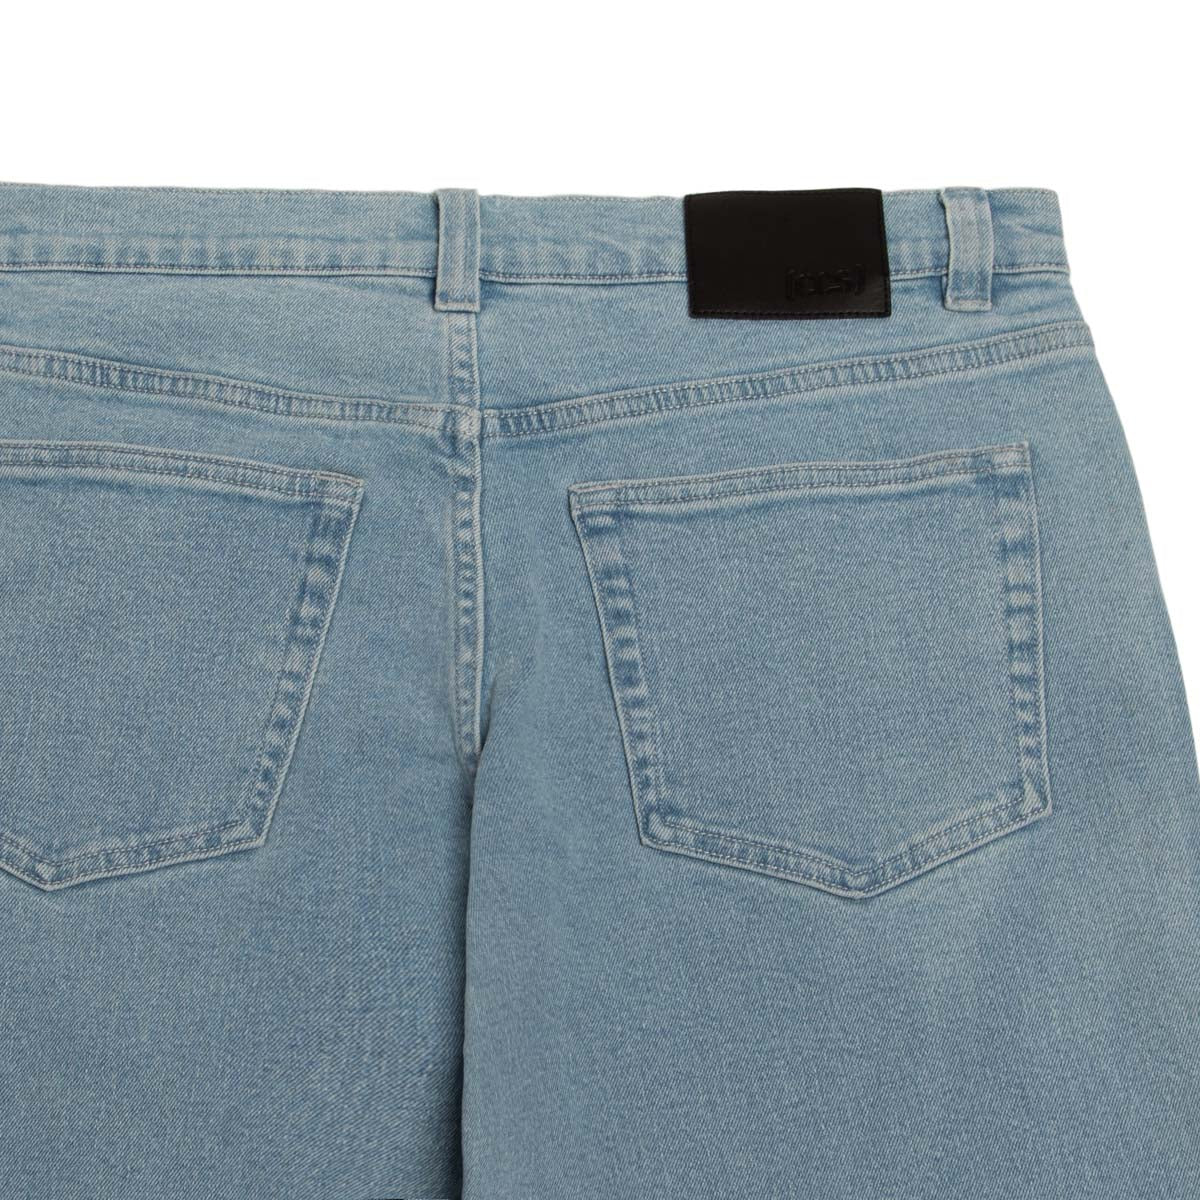 CCS 12oz Stretch Straight Denim Jeans - 12oz Bleach Wash image 6